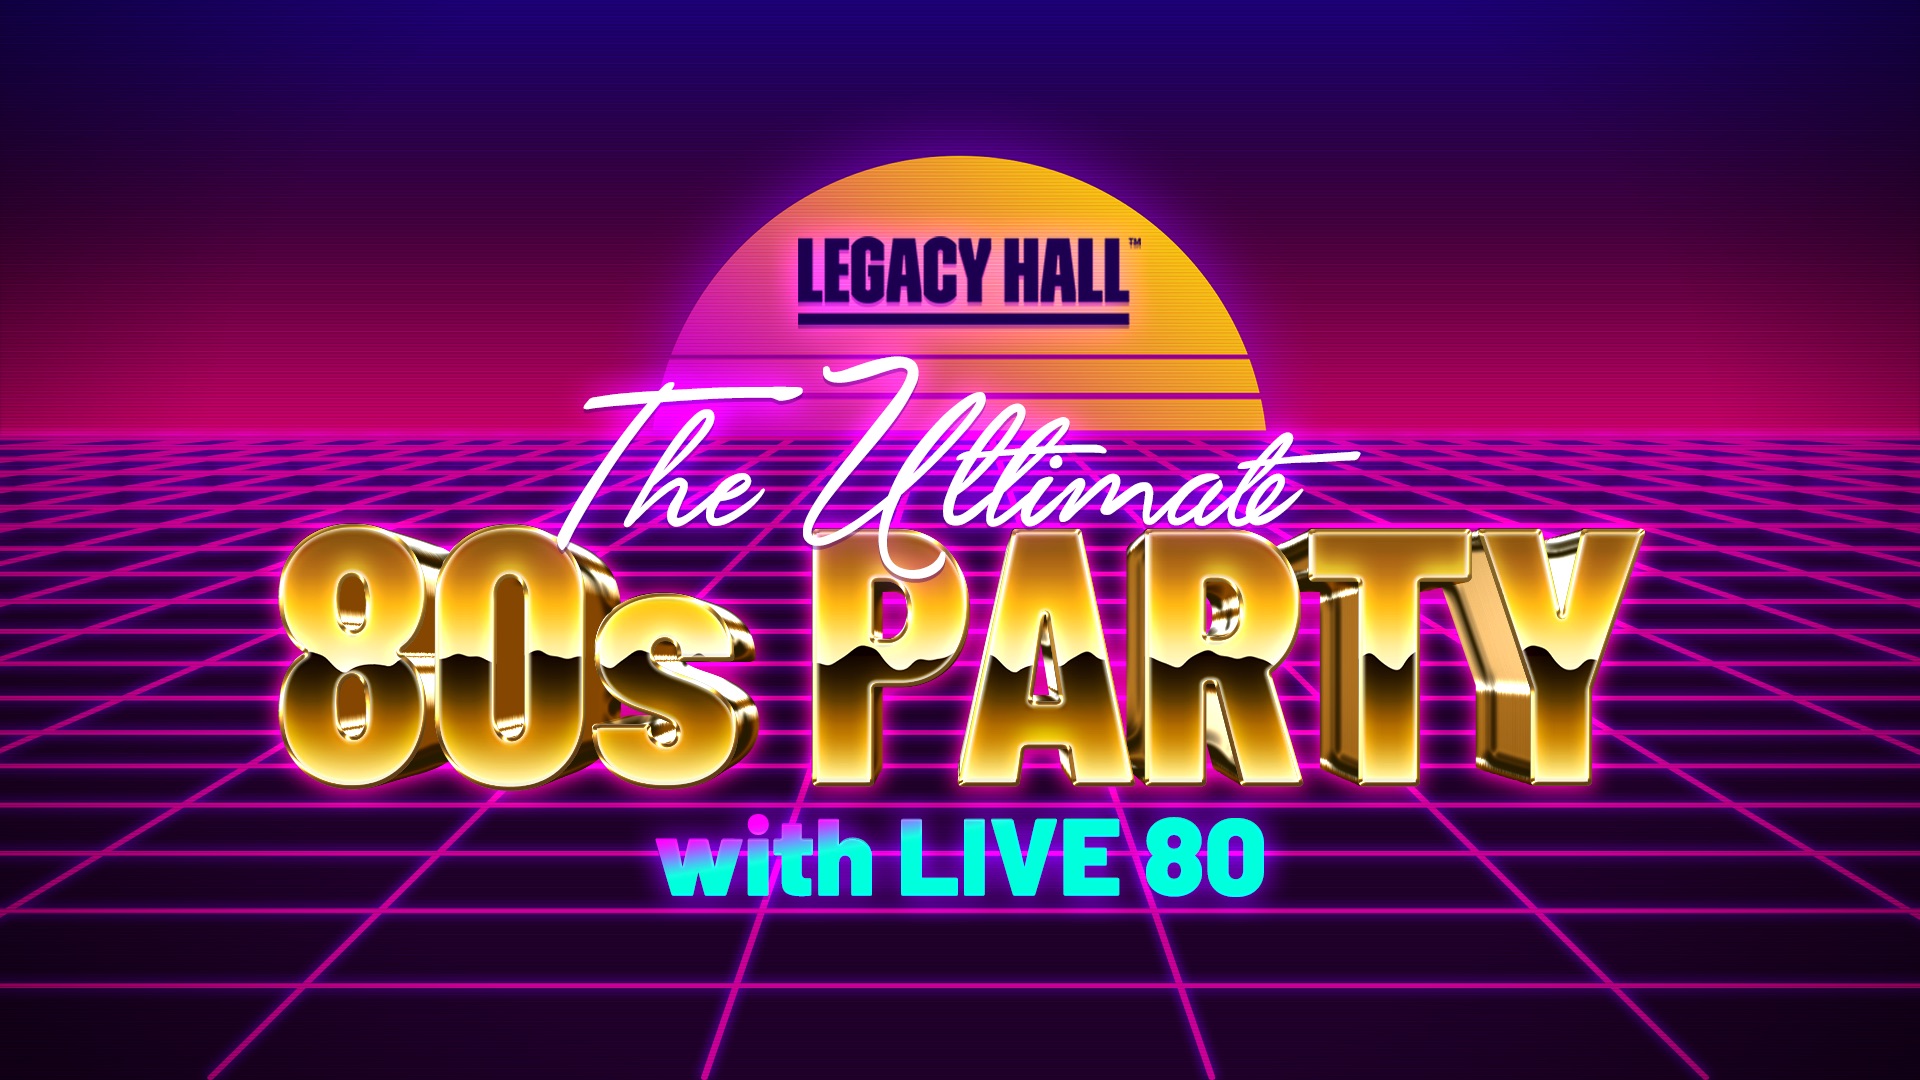 Live 80s at LH Facebook Image